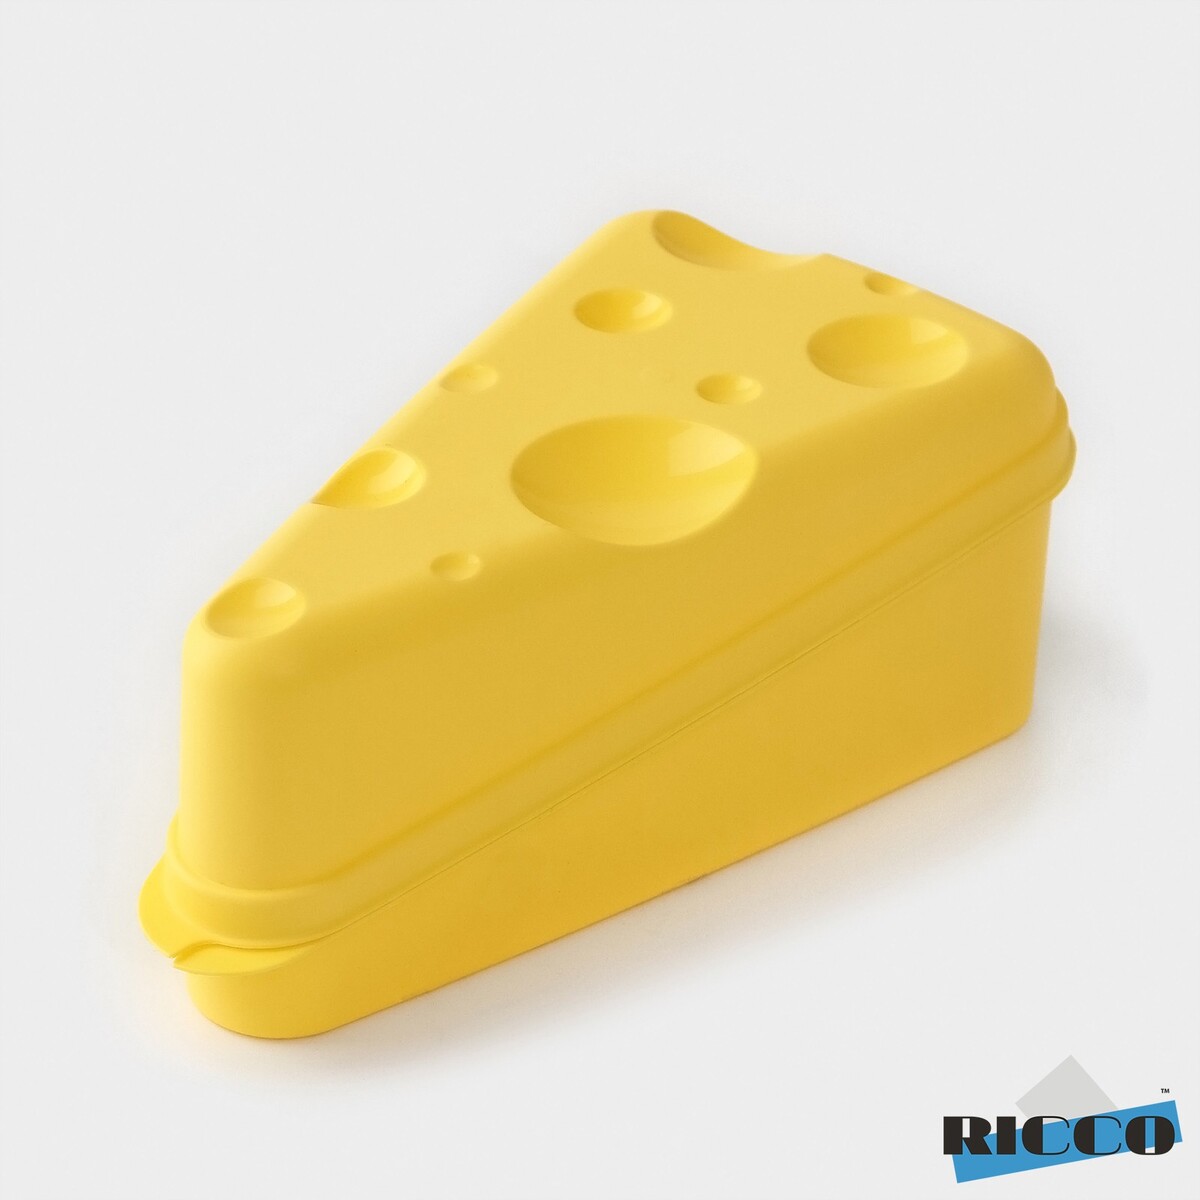 Контейнер для сыра ricco, 19,8х×10,6×7,5 см, цвет желтый контейнер для сыра ricco 19 8х×10 6×7 5 см жёлтый